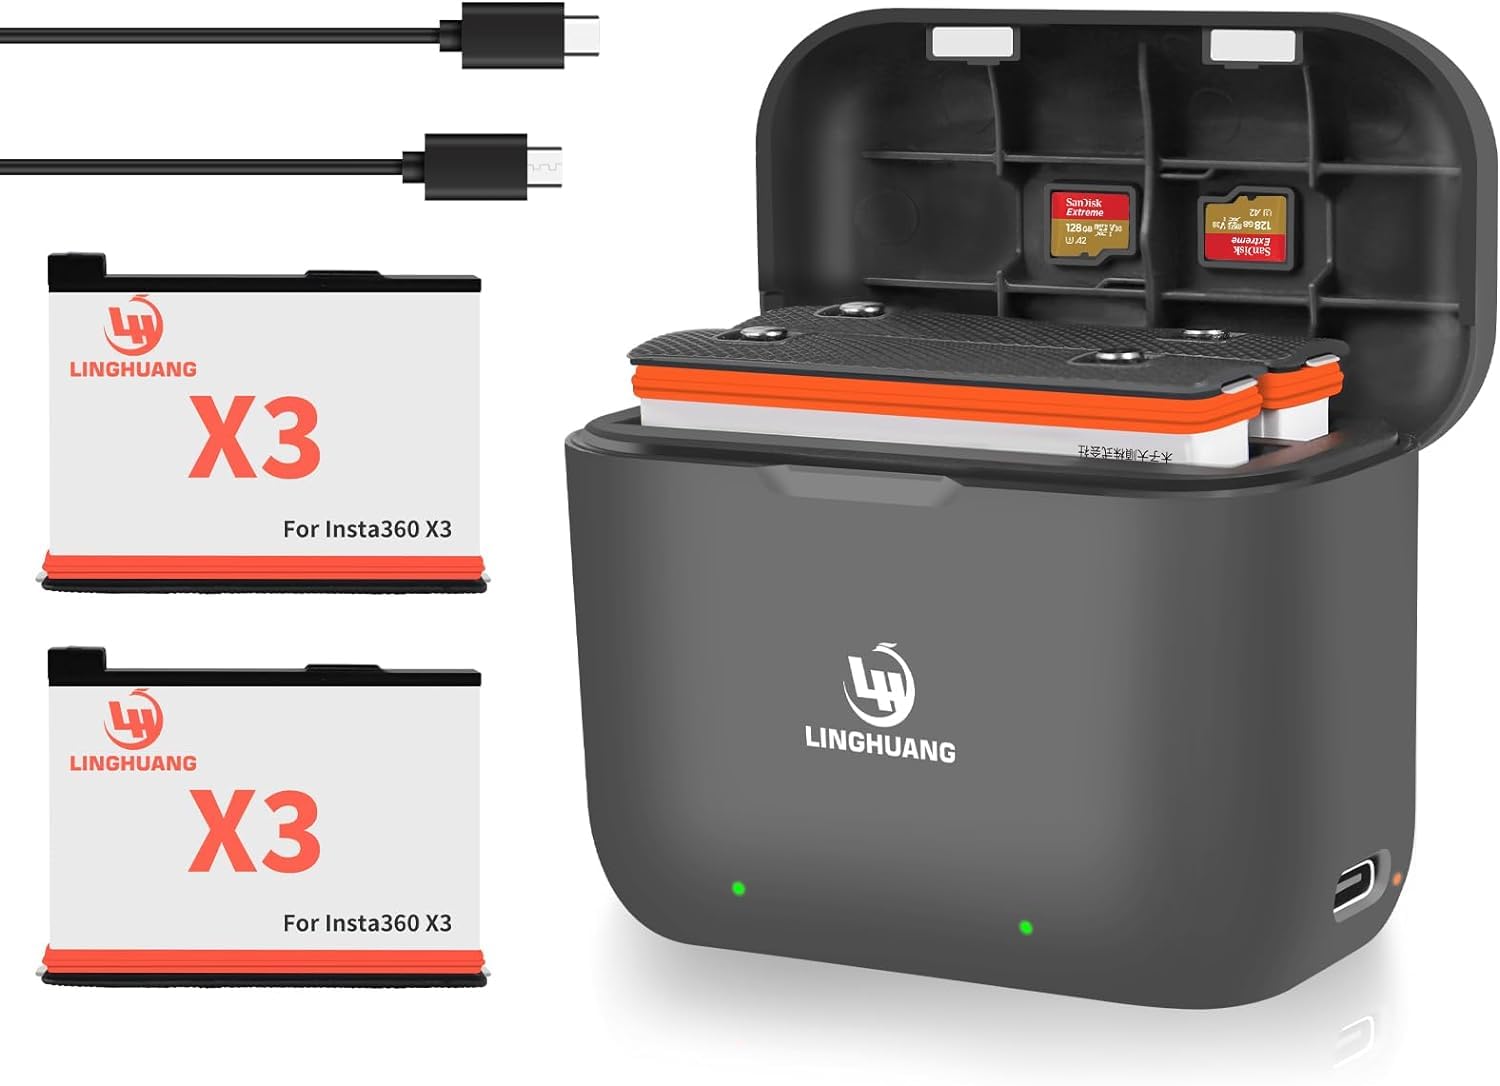 LINGHUANG Insta360 X3バッテリー 予備バッテリー2個 1800mAh Insta360 X3 バッテリー充電器 X3デュアル充電ハブ バッテリー収納ケース兼用 USB-C充電ケーブル付き insta360 x3 アクセサリー対応